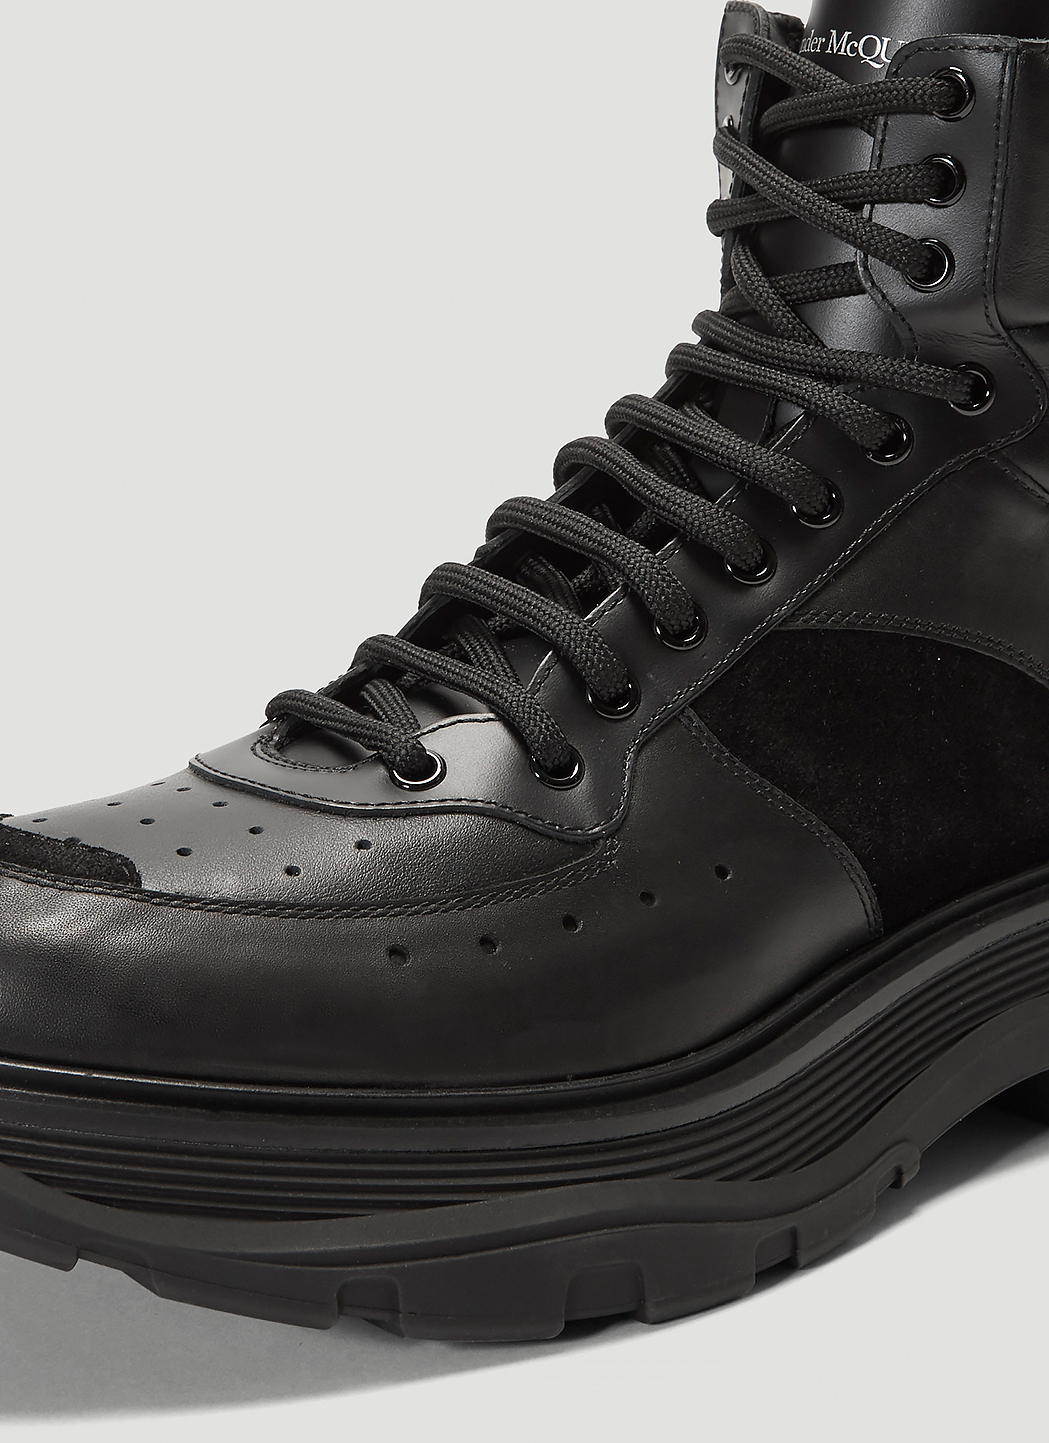 Alexander McQueen Leather Tread Boots | LN-CC